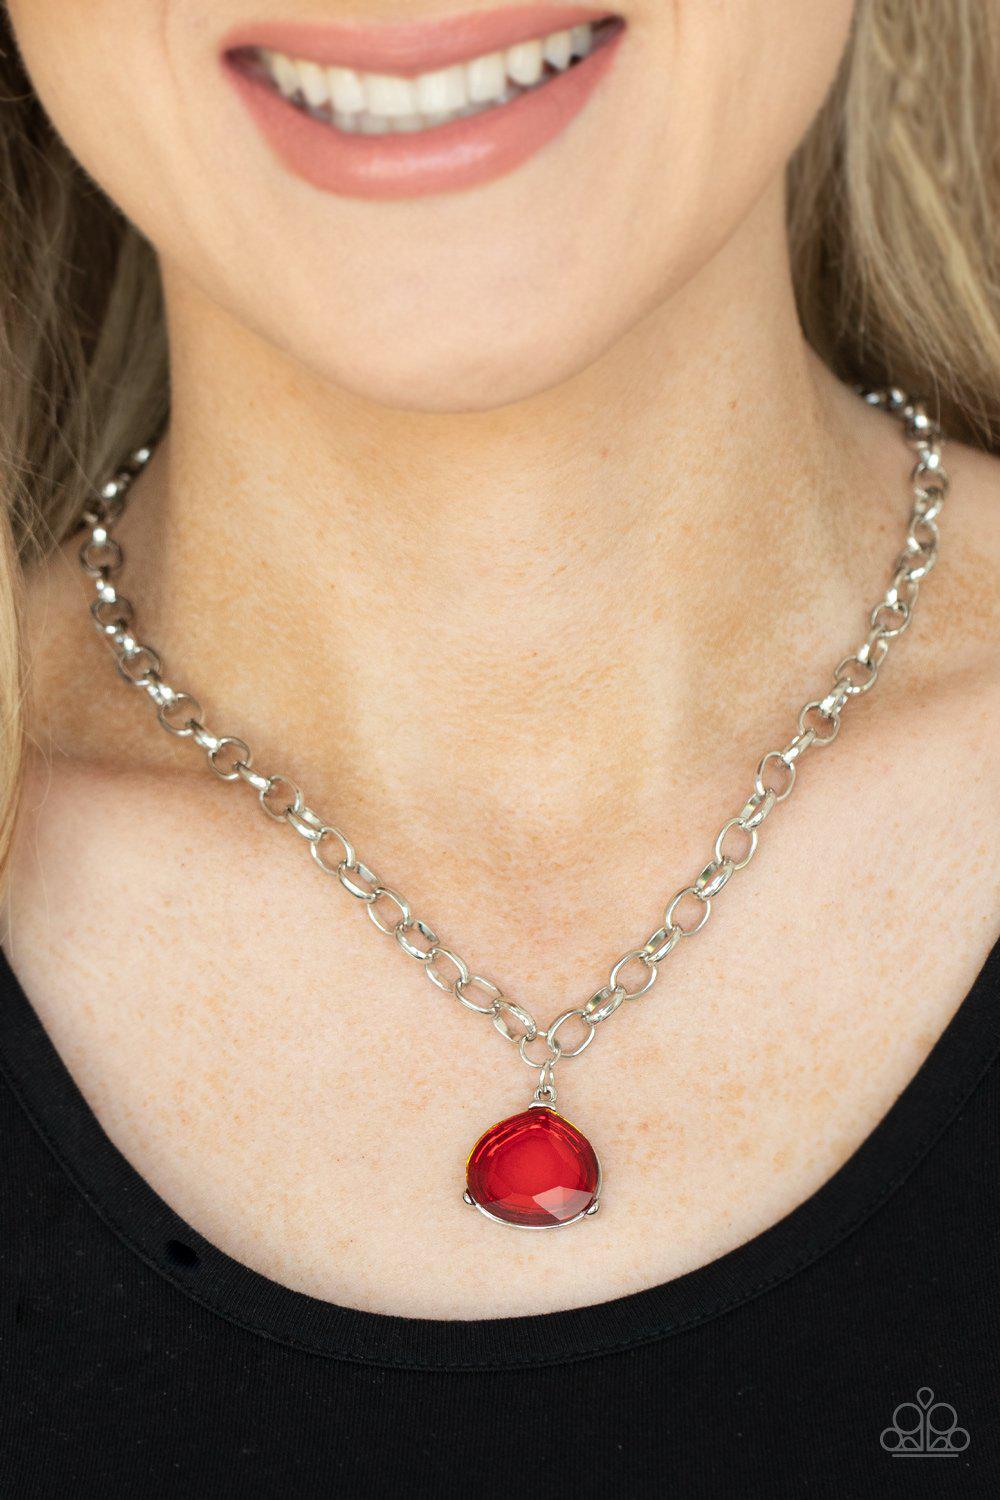 Gallery Gem Red Rhinestone Necklace - Paparazzi Accessories- lightbox - CarasShop.com - $5 Jewelry by Cara Jewels